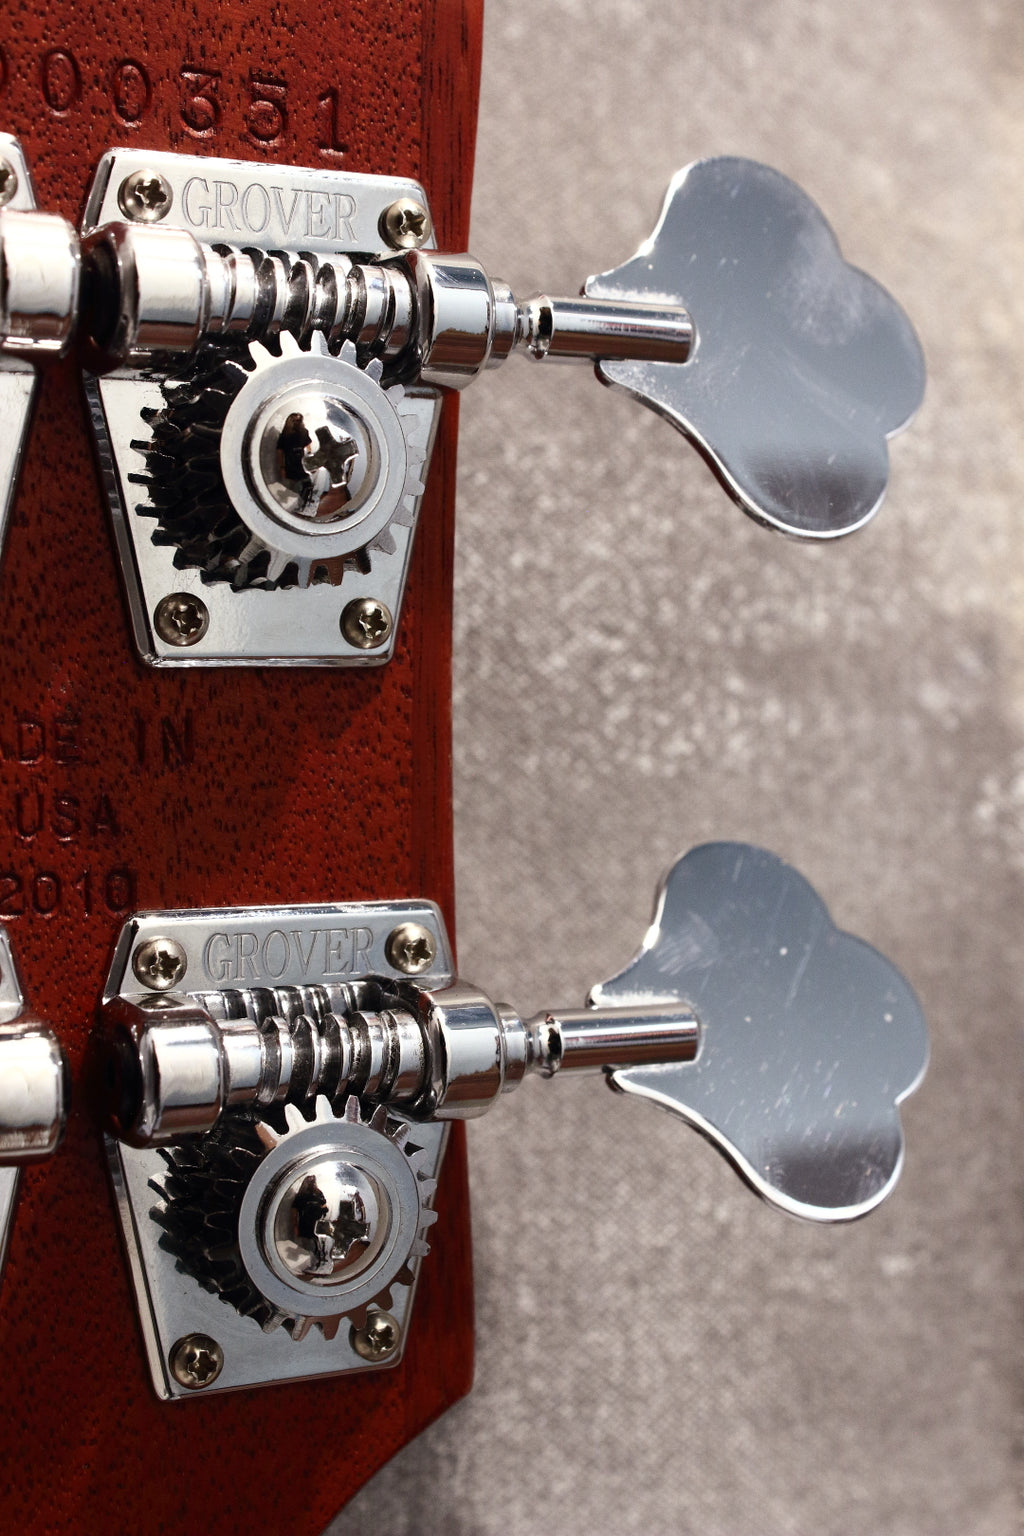 Gibson SG Bass Faded Cherry 2010